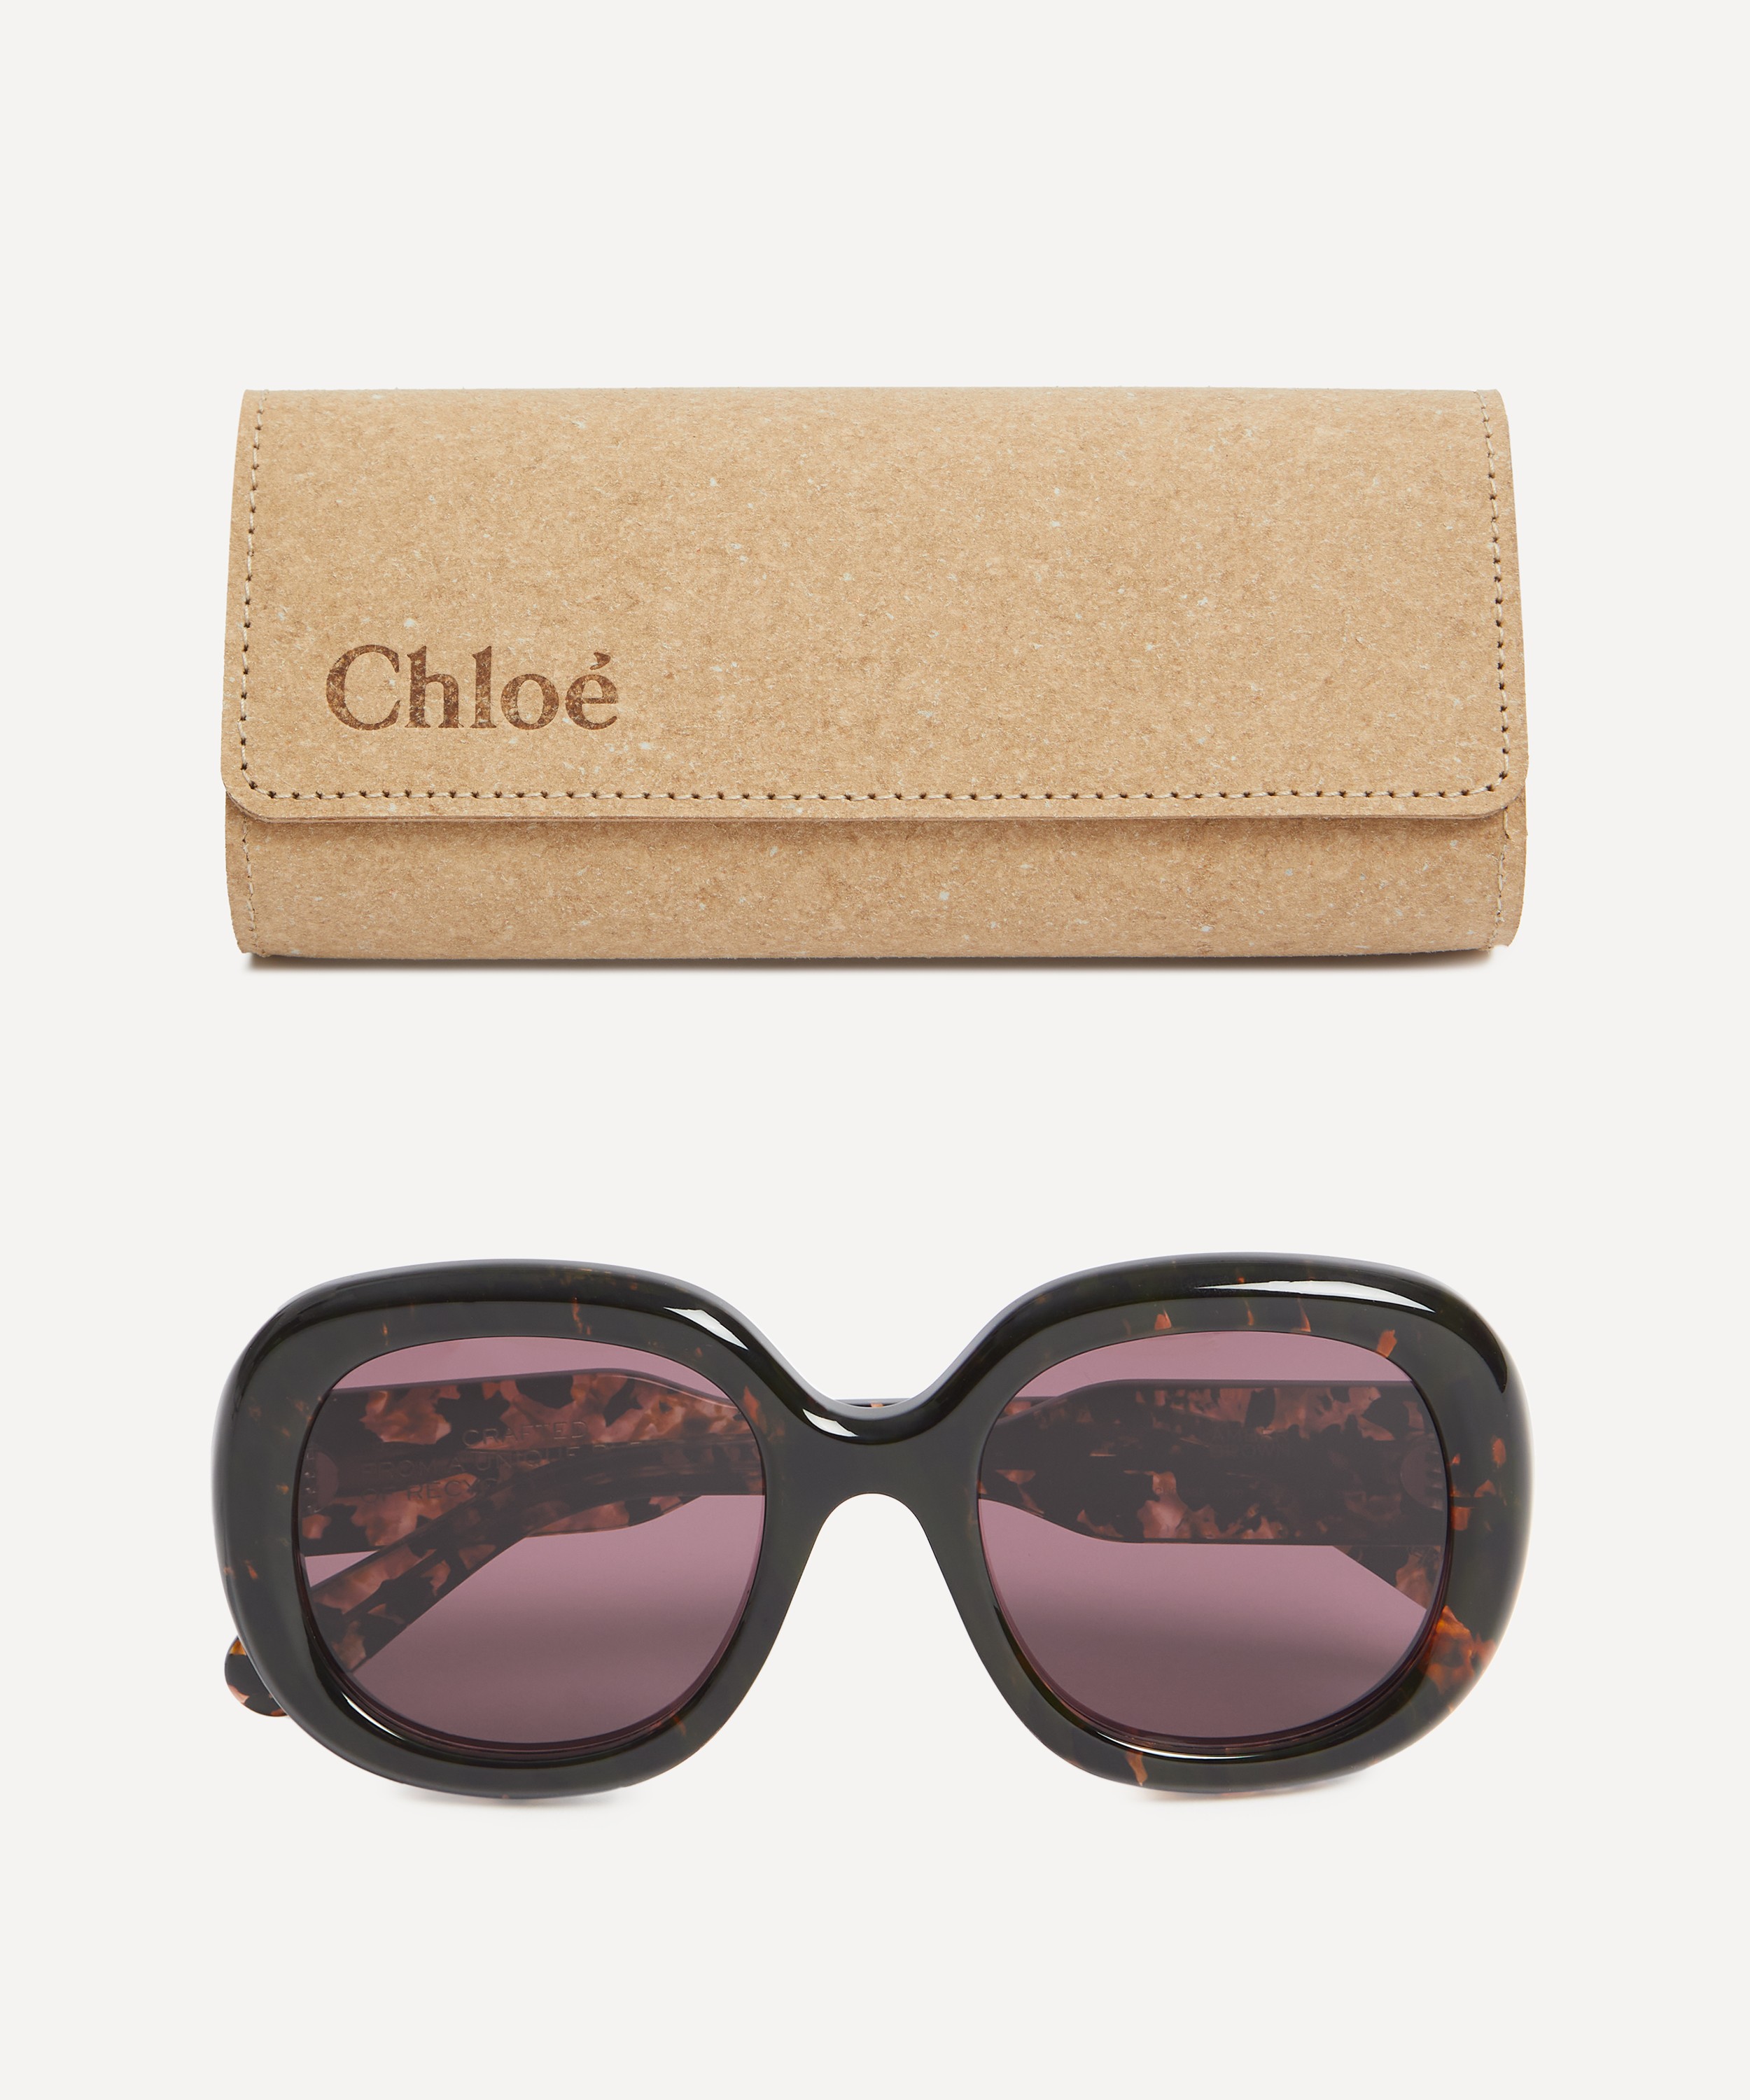 Chloé - Round Sunglasses image number 3